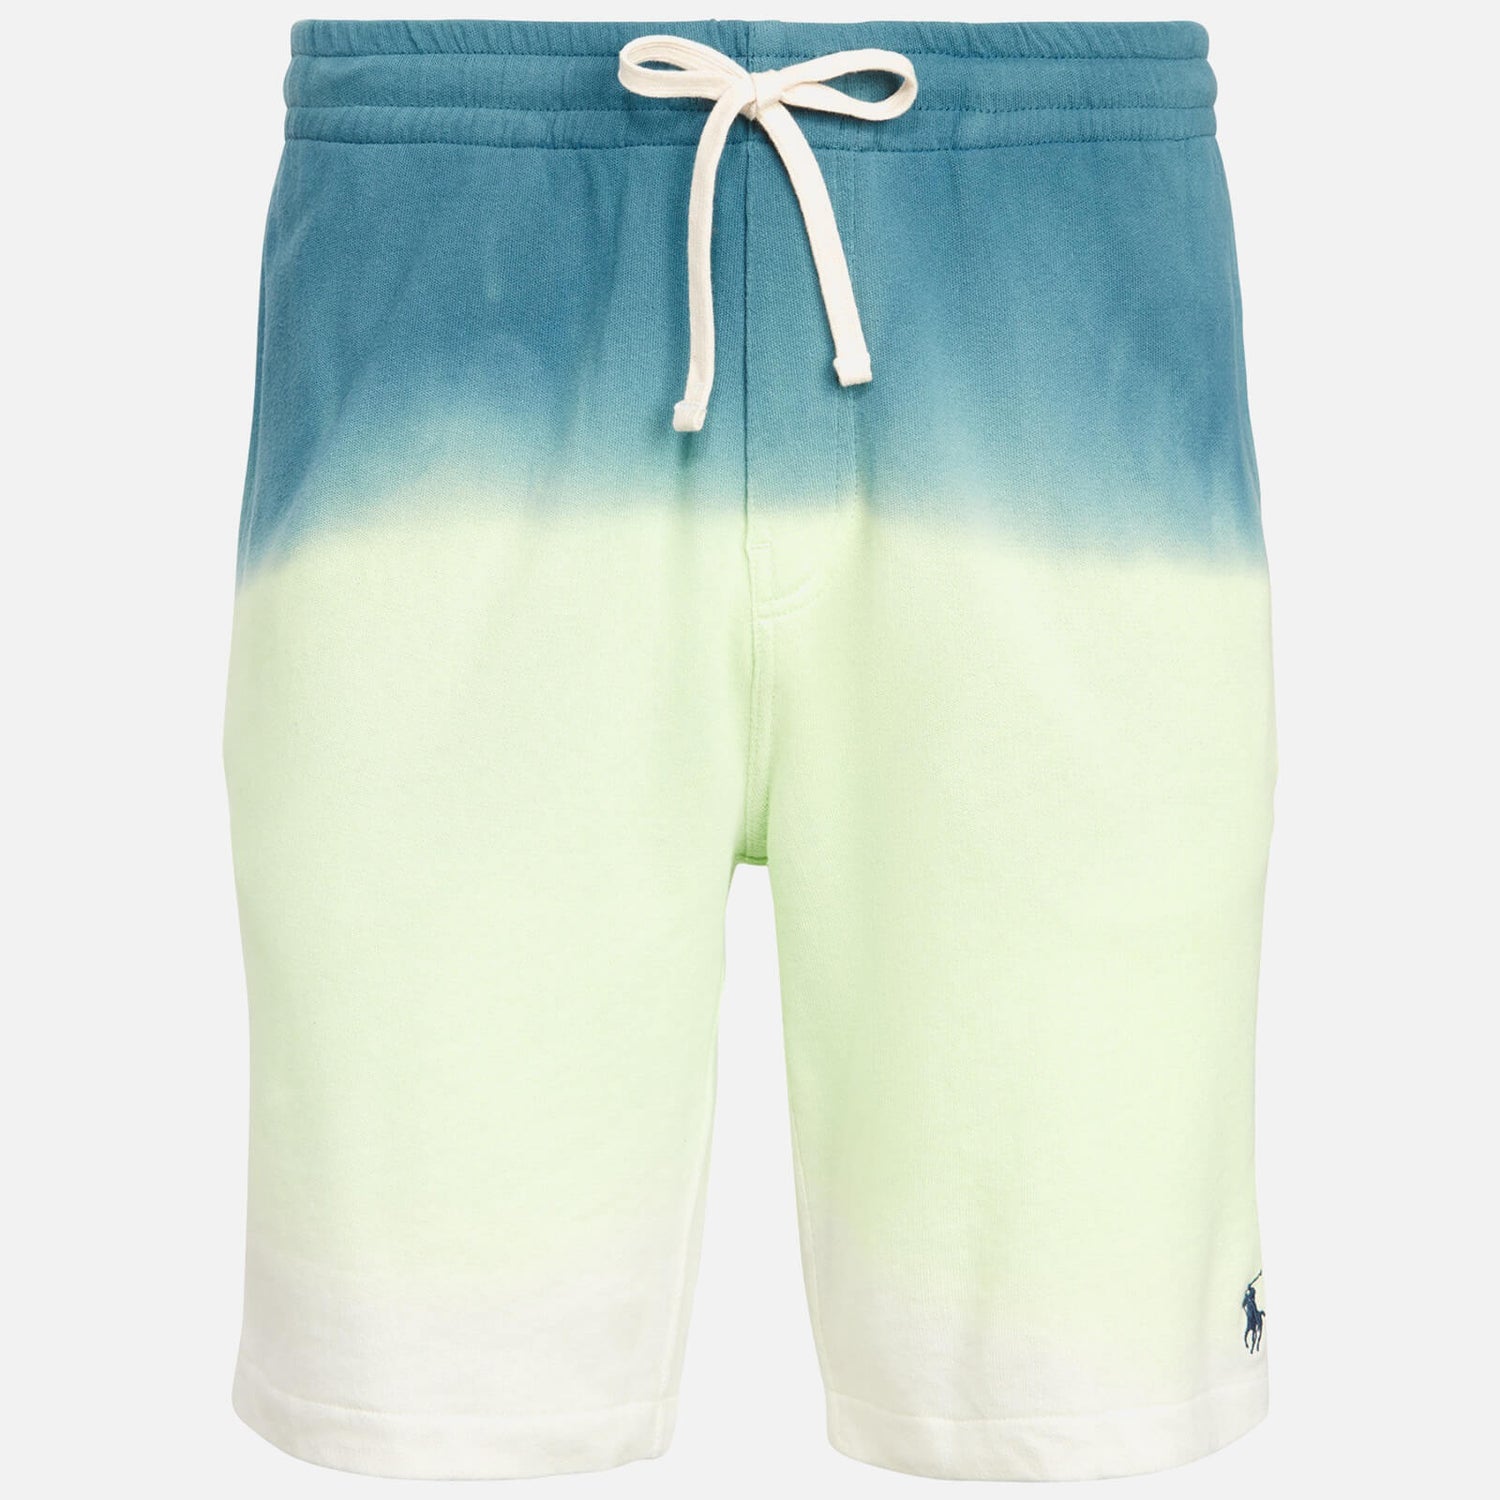 Polo Ralph Lauren Men's Cotton Spa Terry Shorts - Cruise Lime Dip Dye Multi - S